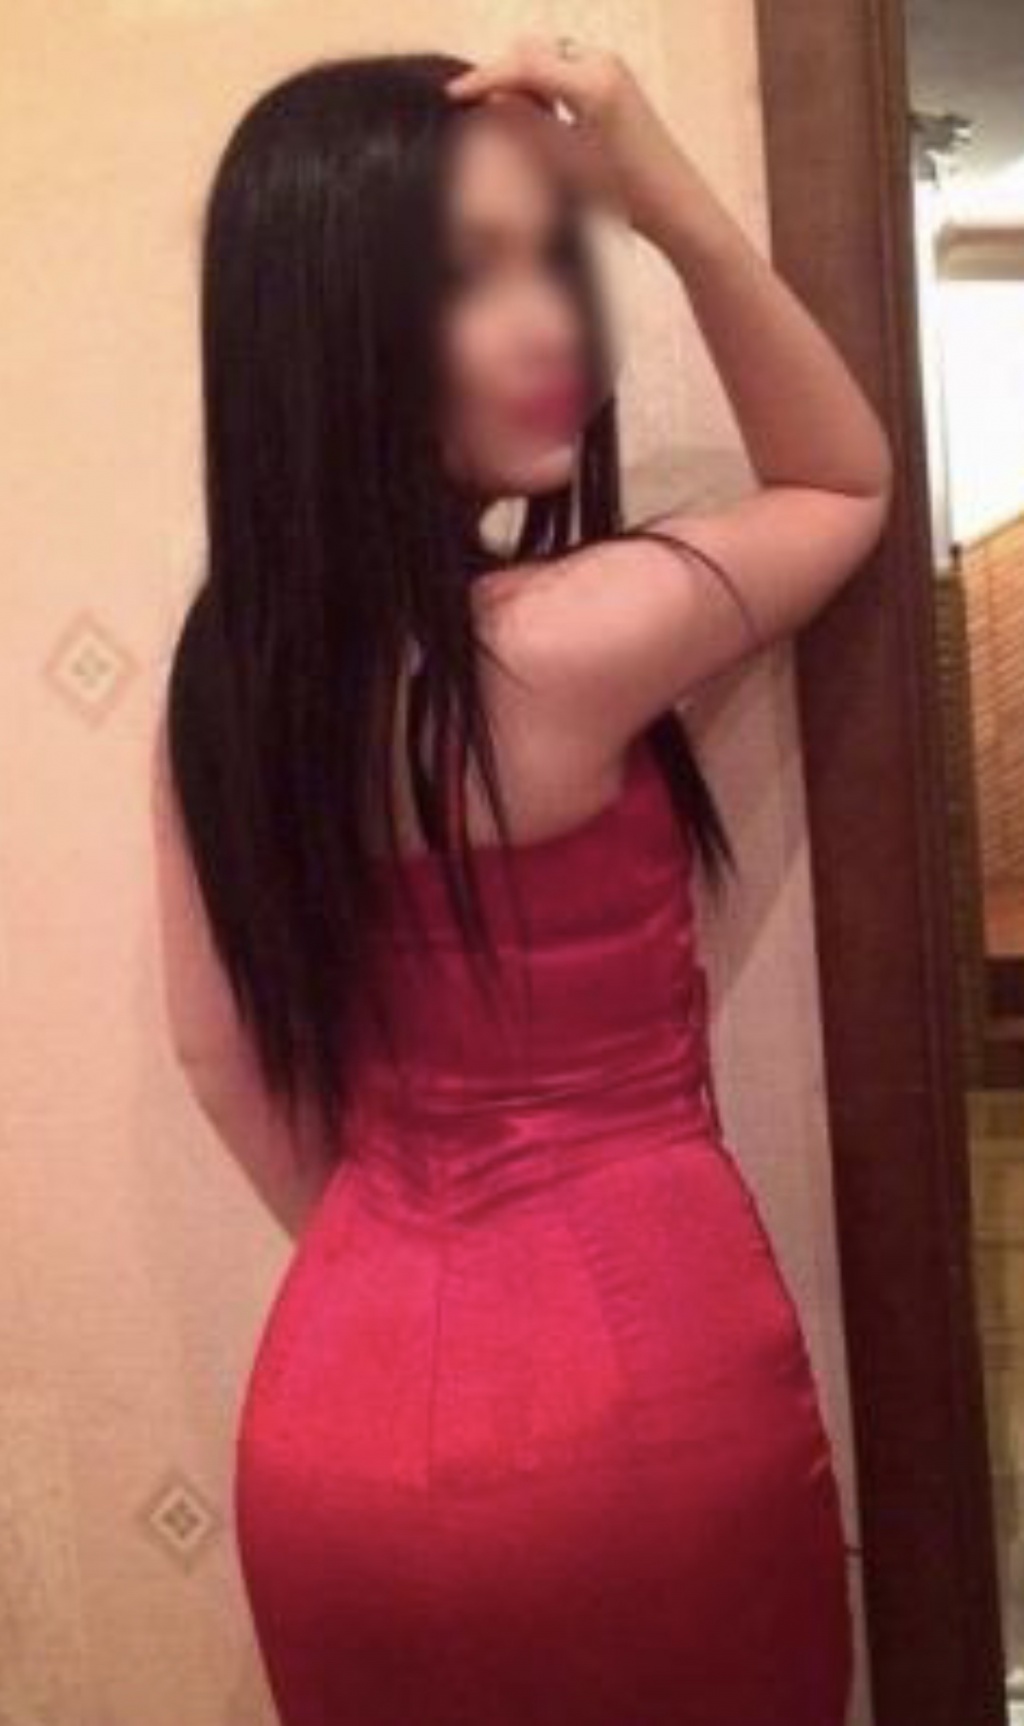 Снежанна : проститутки индивидуалки в Омске